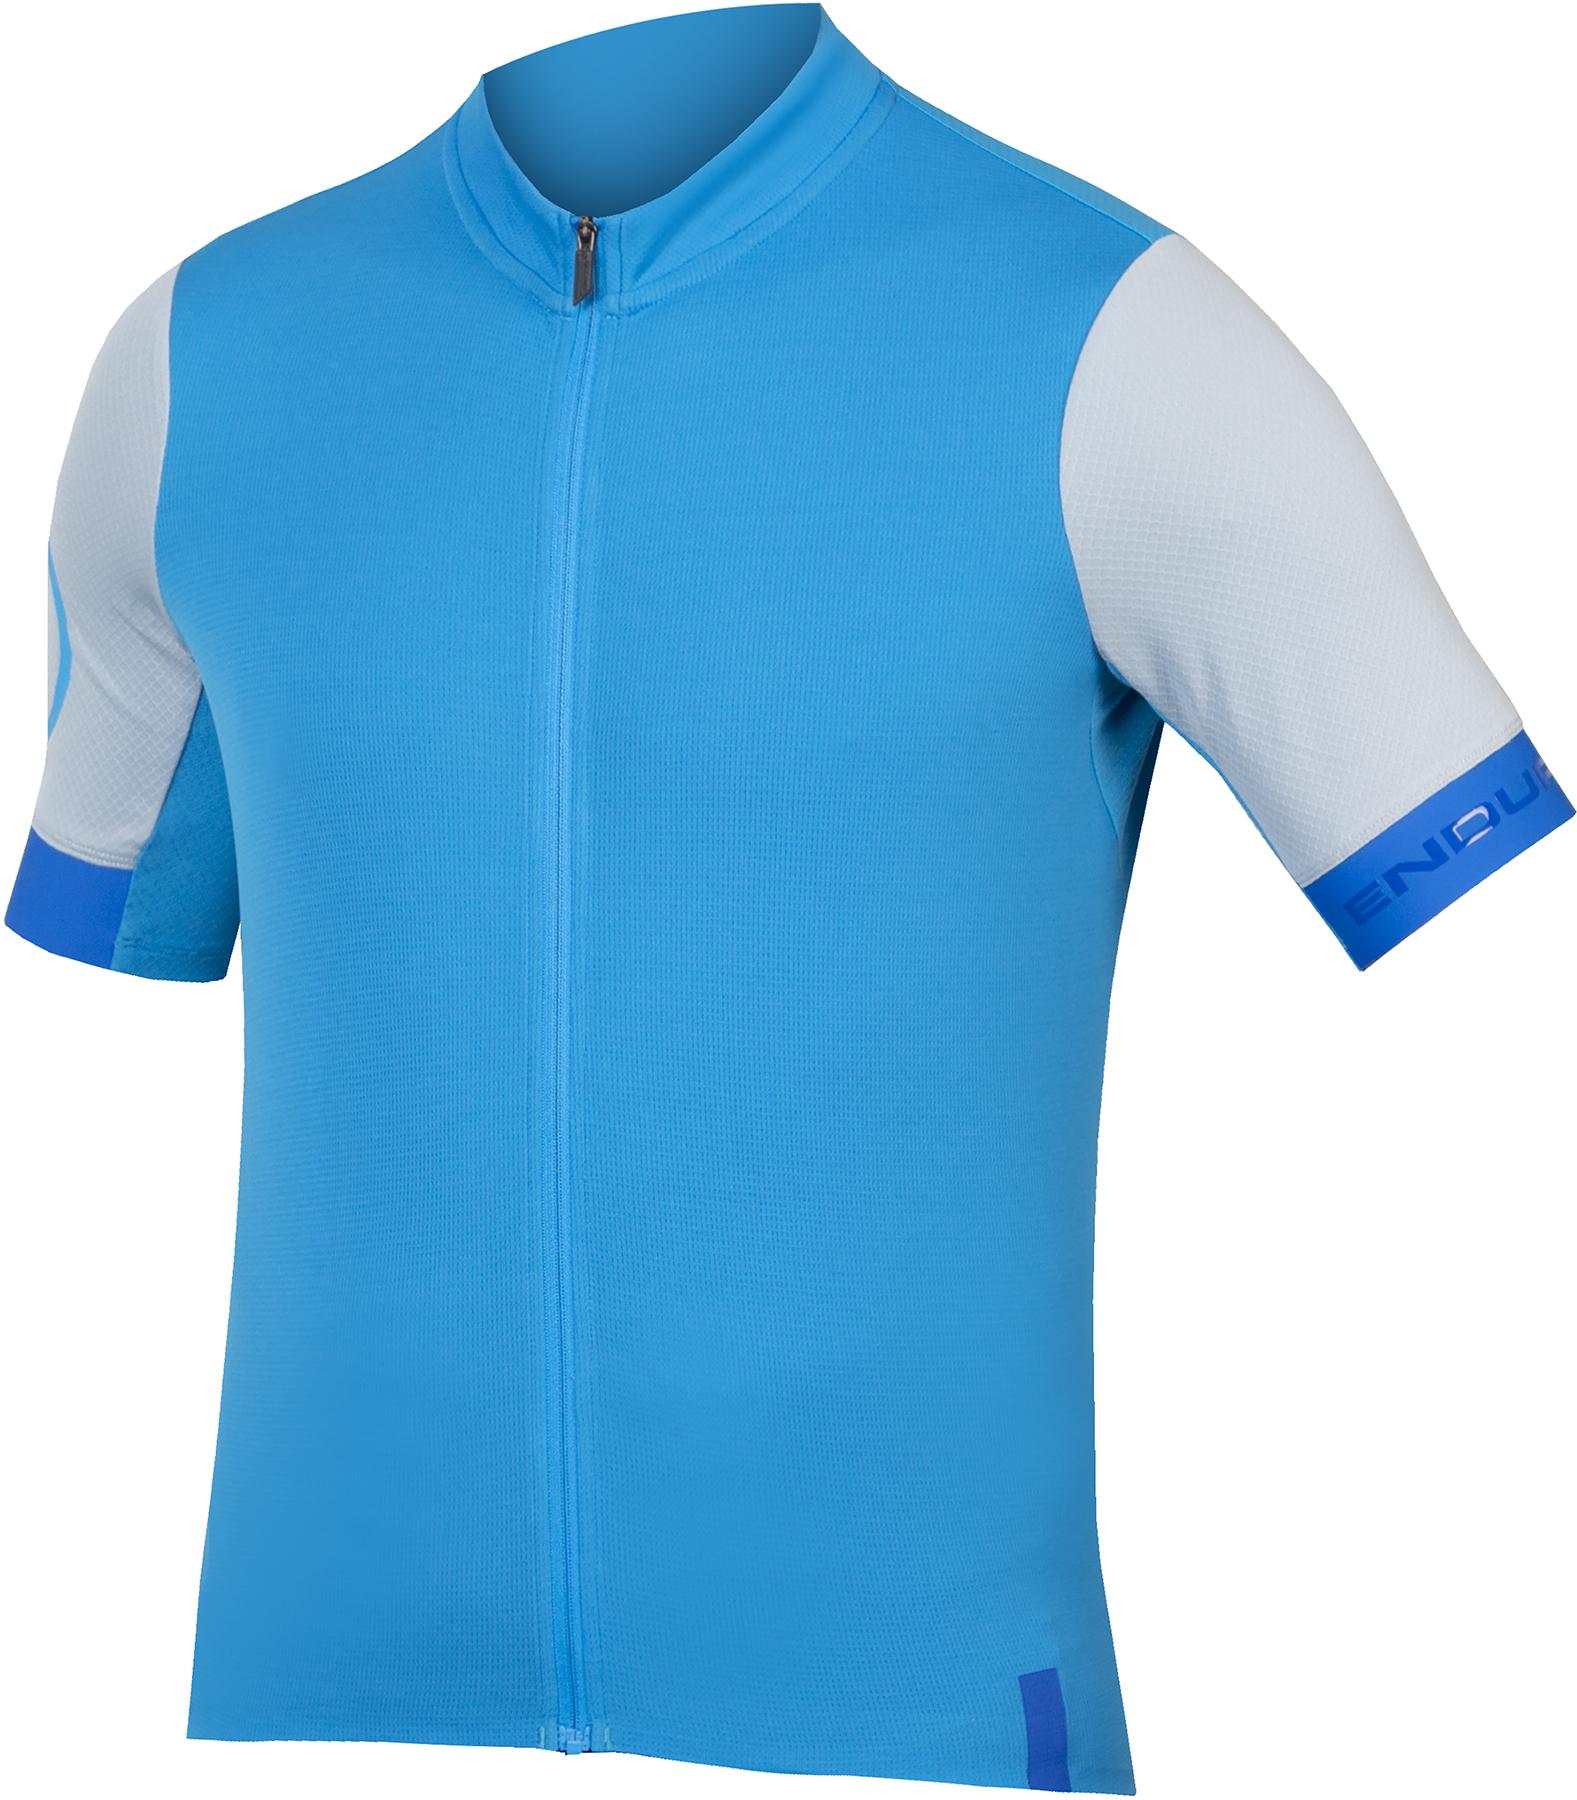 Endura Fs260 Short Sleeve Cycling Jersey - Hi-viz Blue